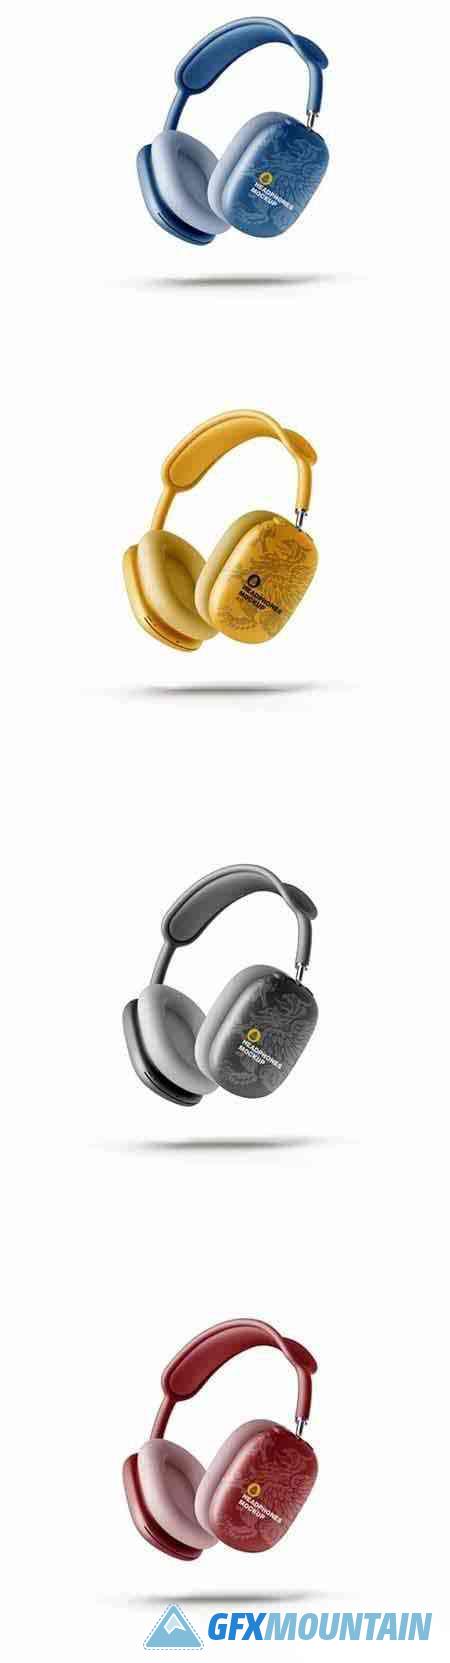 Headphones Mockup